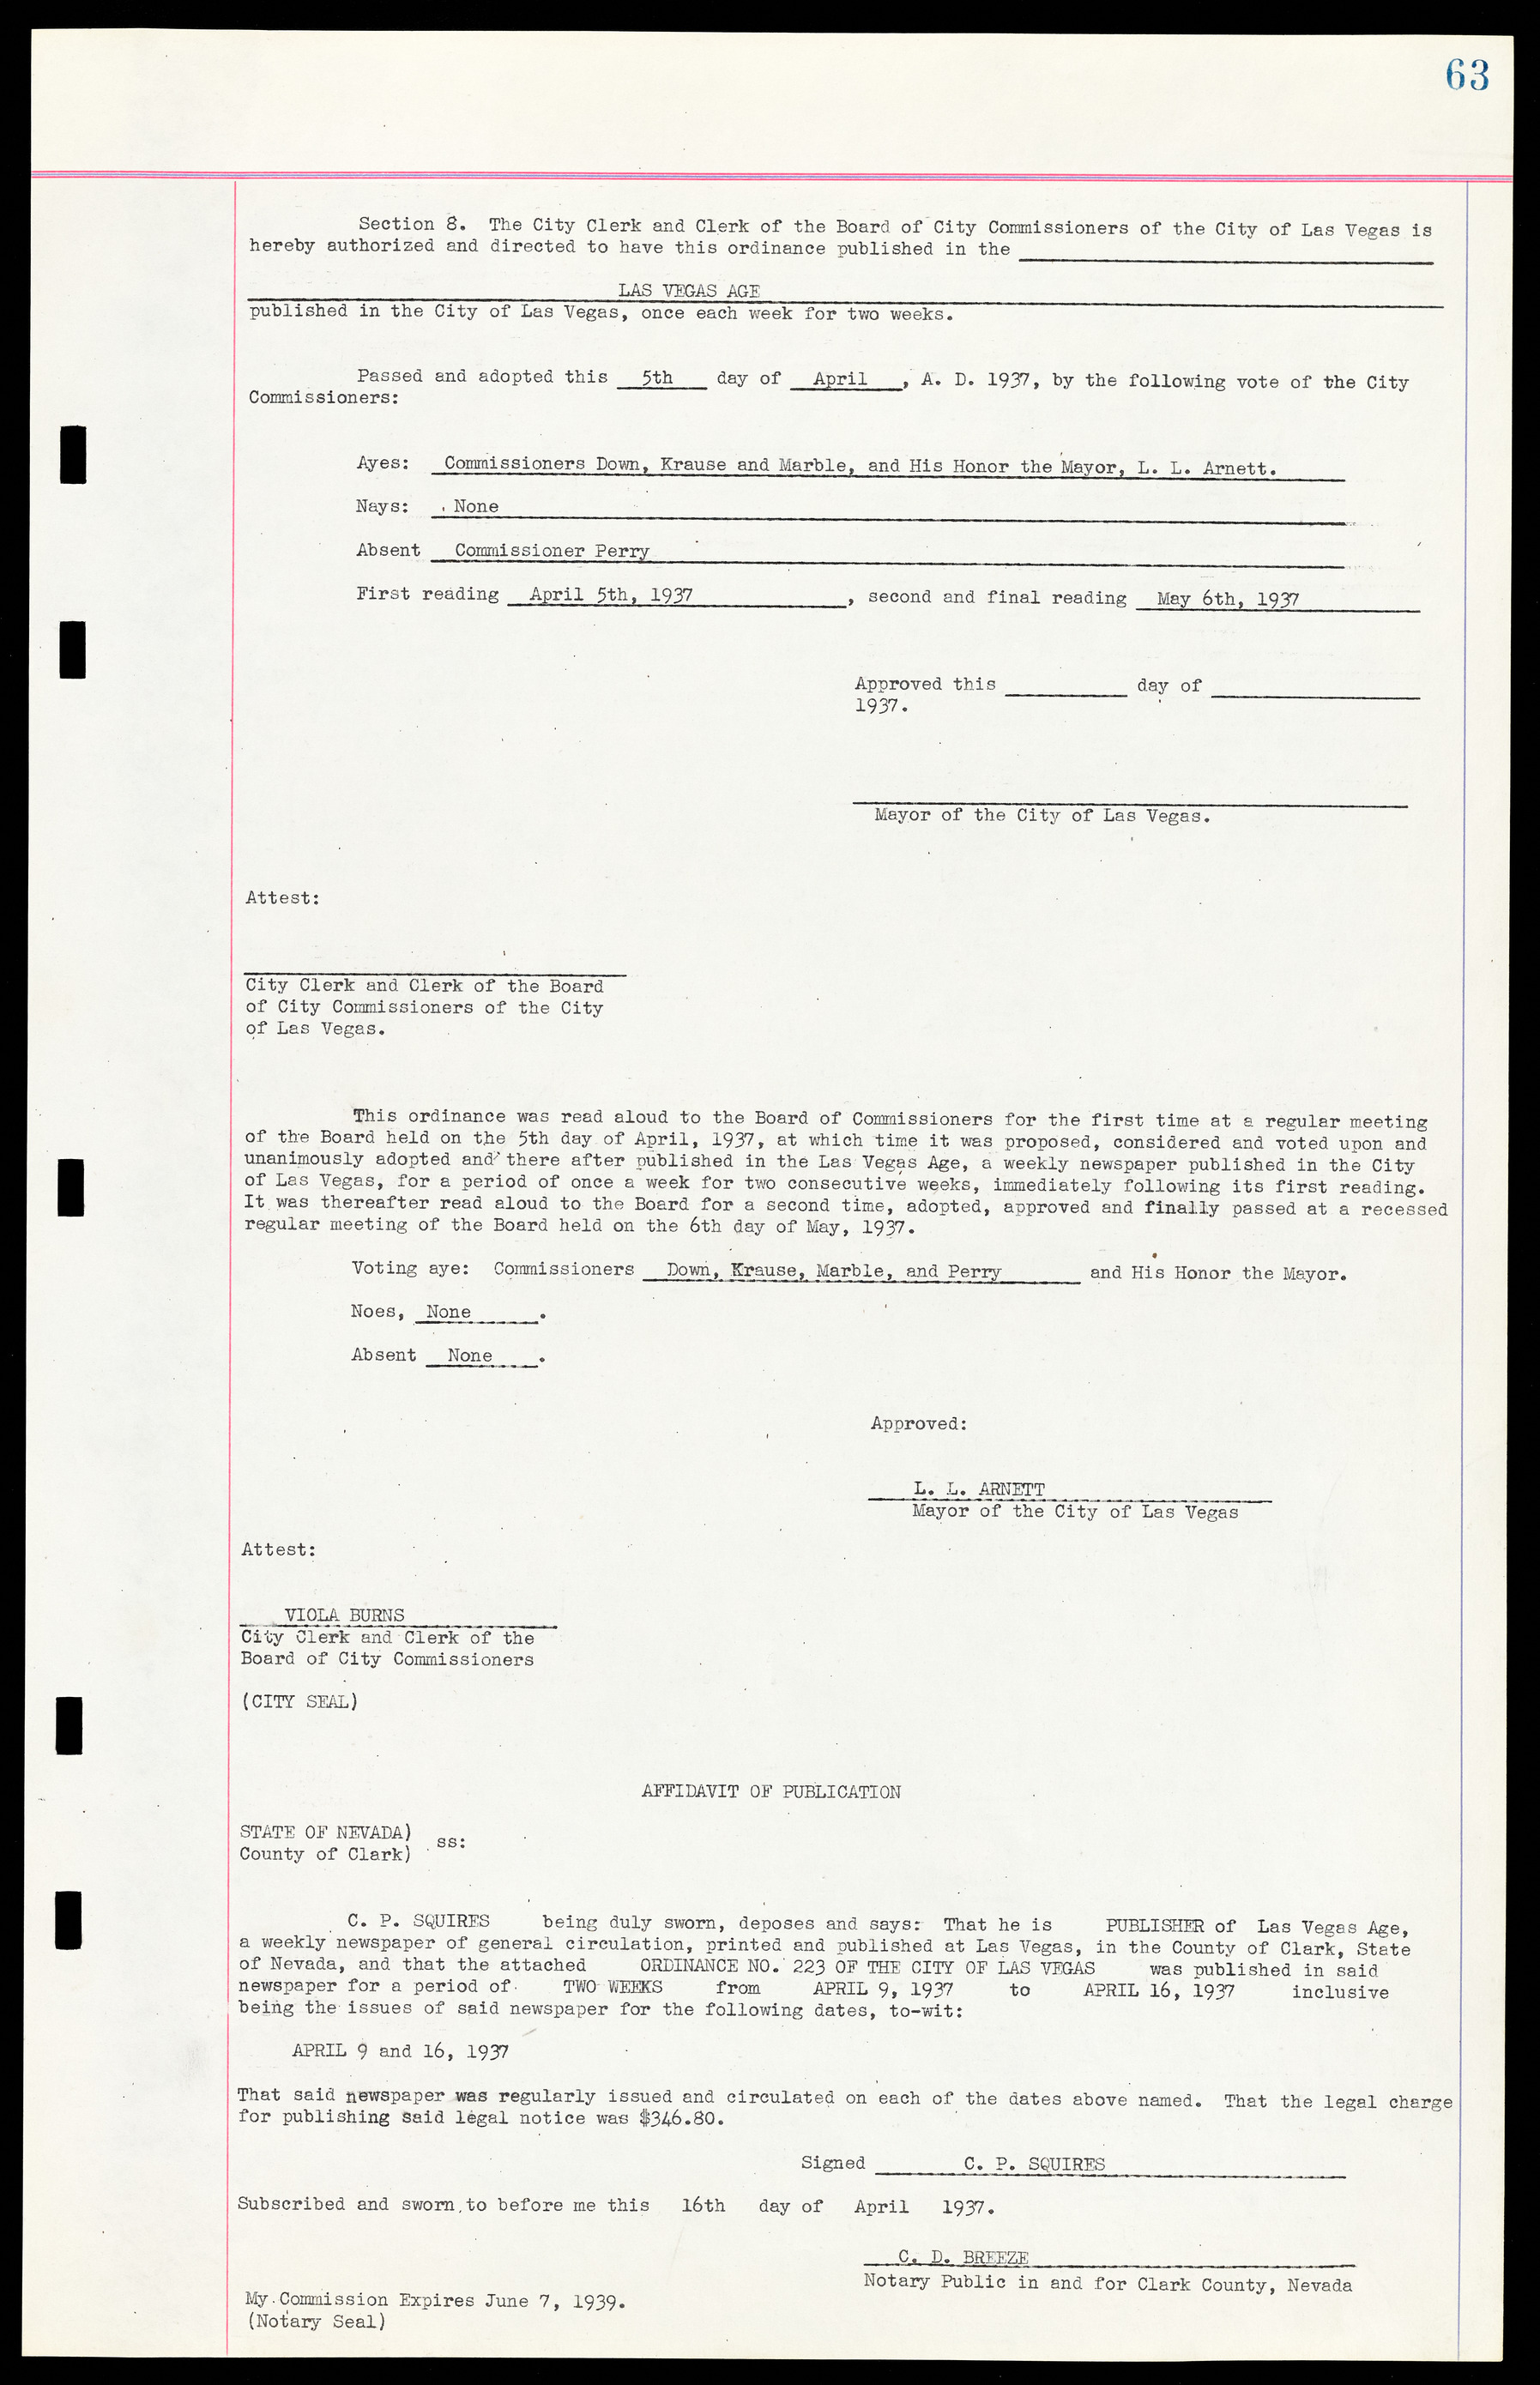 Las Vegas City Ordinances, March 31, 1933 to October 25, 1950, lvc000014-81